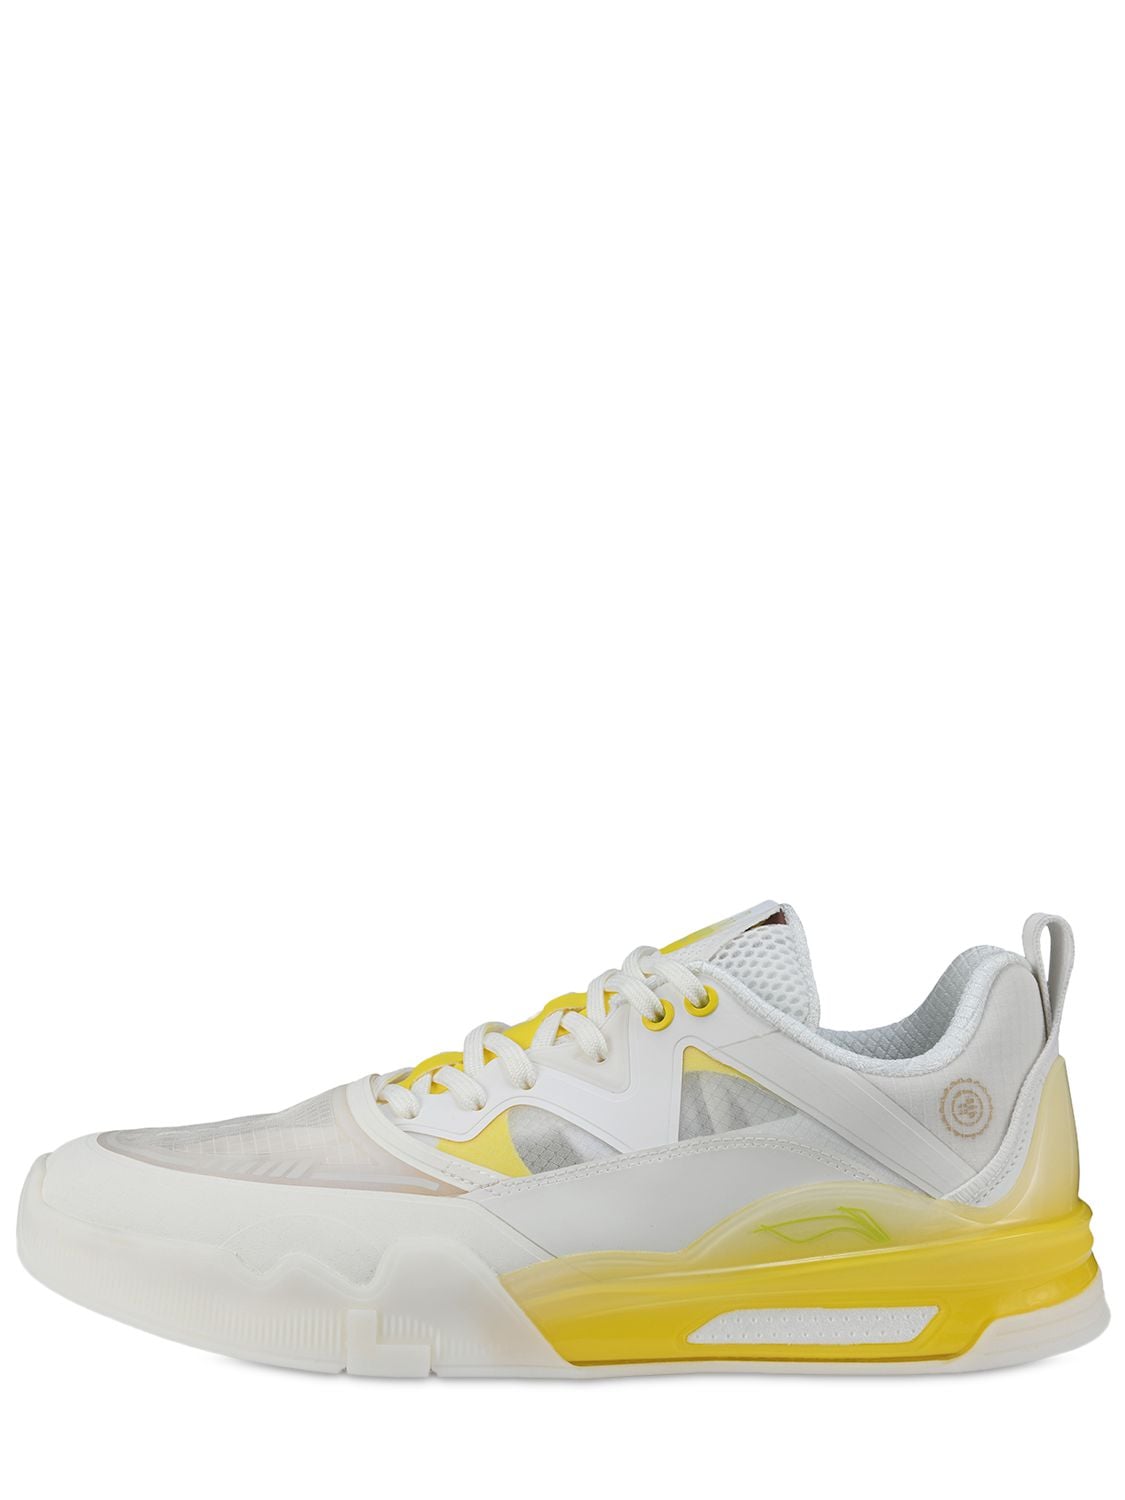 Li-ning Erik Ellington Pro Sneakers In Yellow,white